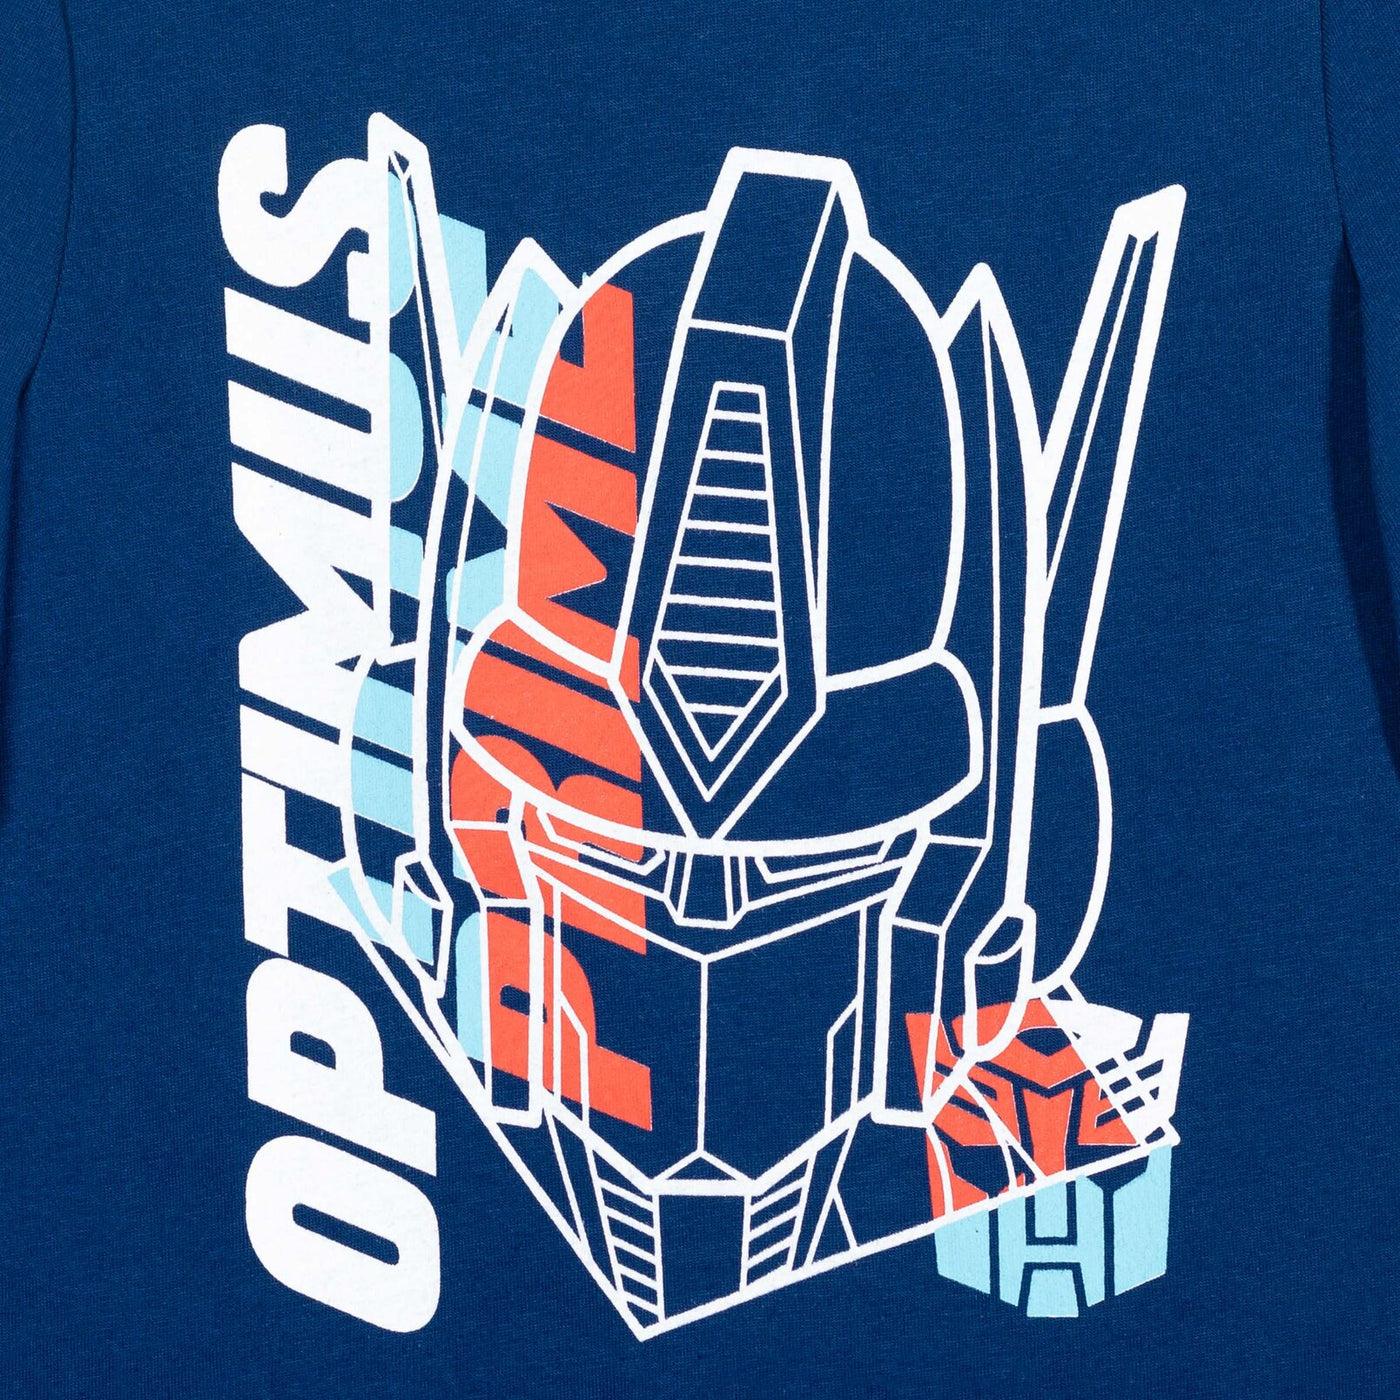 Transformers 2 Pack Long Sleeve T-Shirts